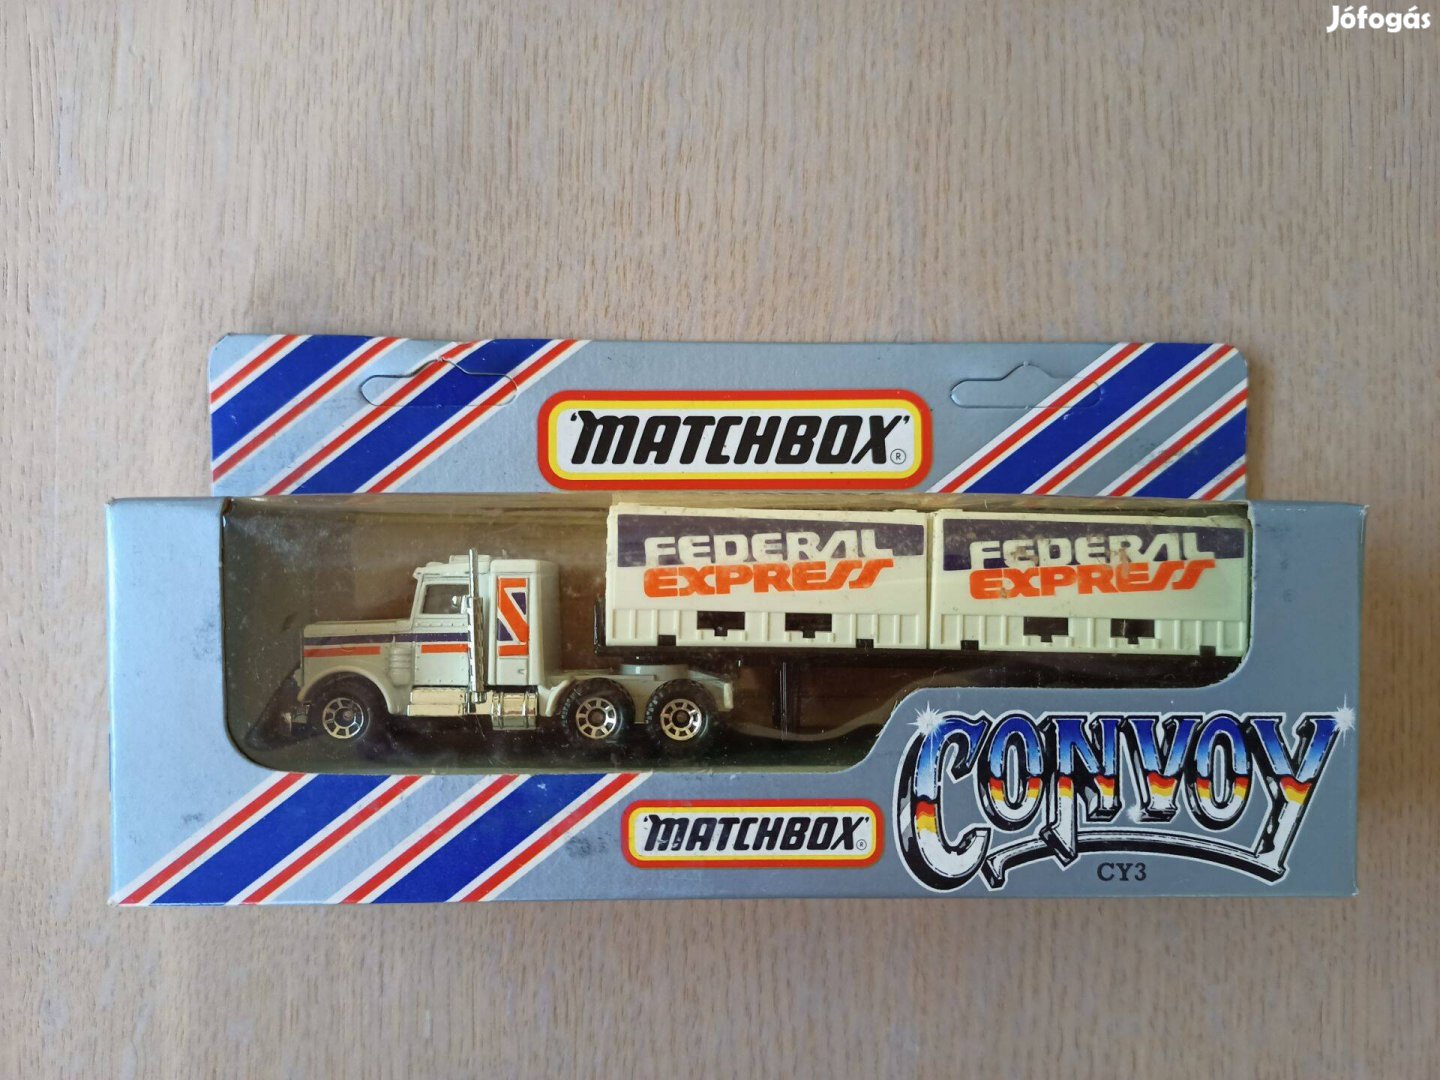 Matchbox Convoy CY3 Federal Express